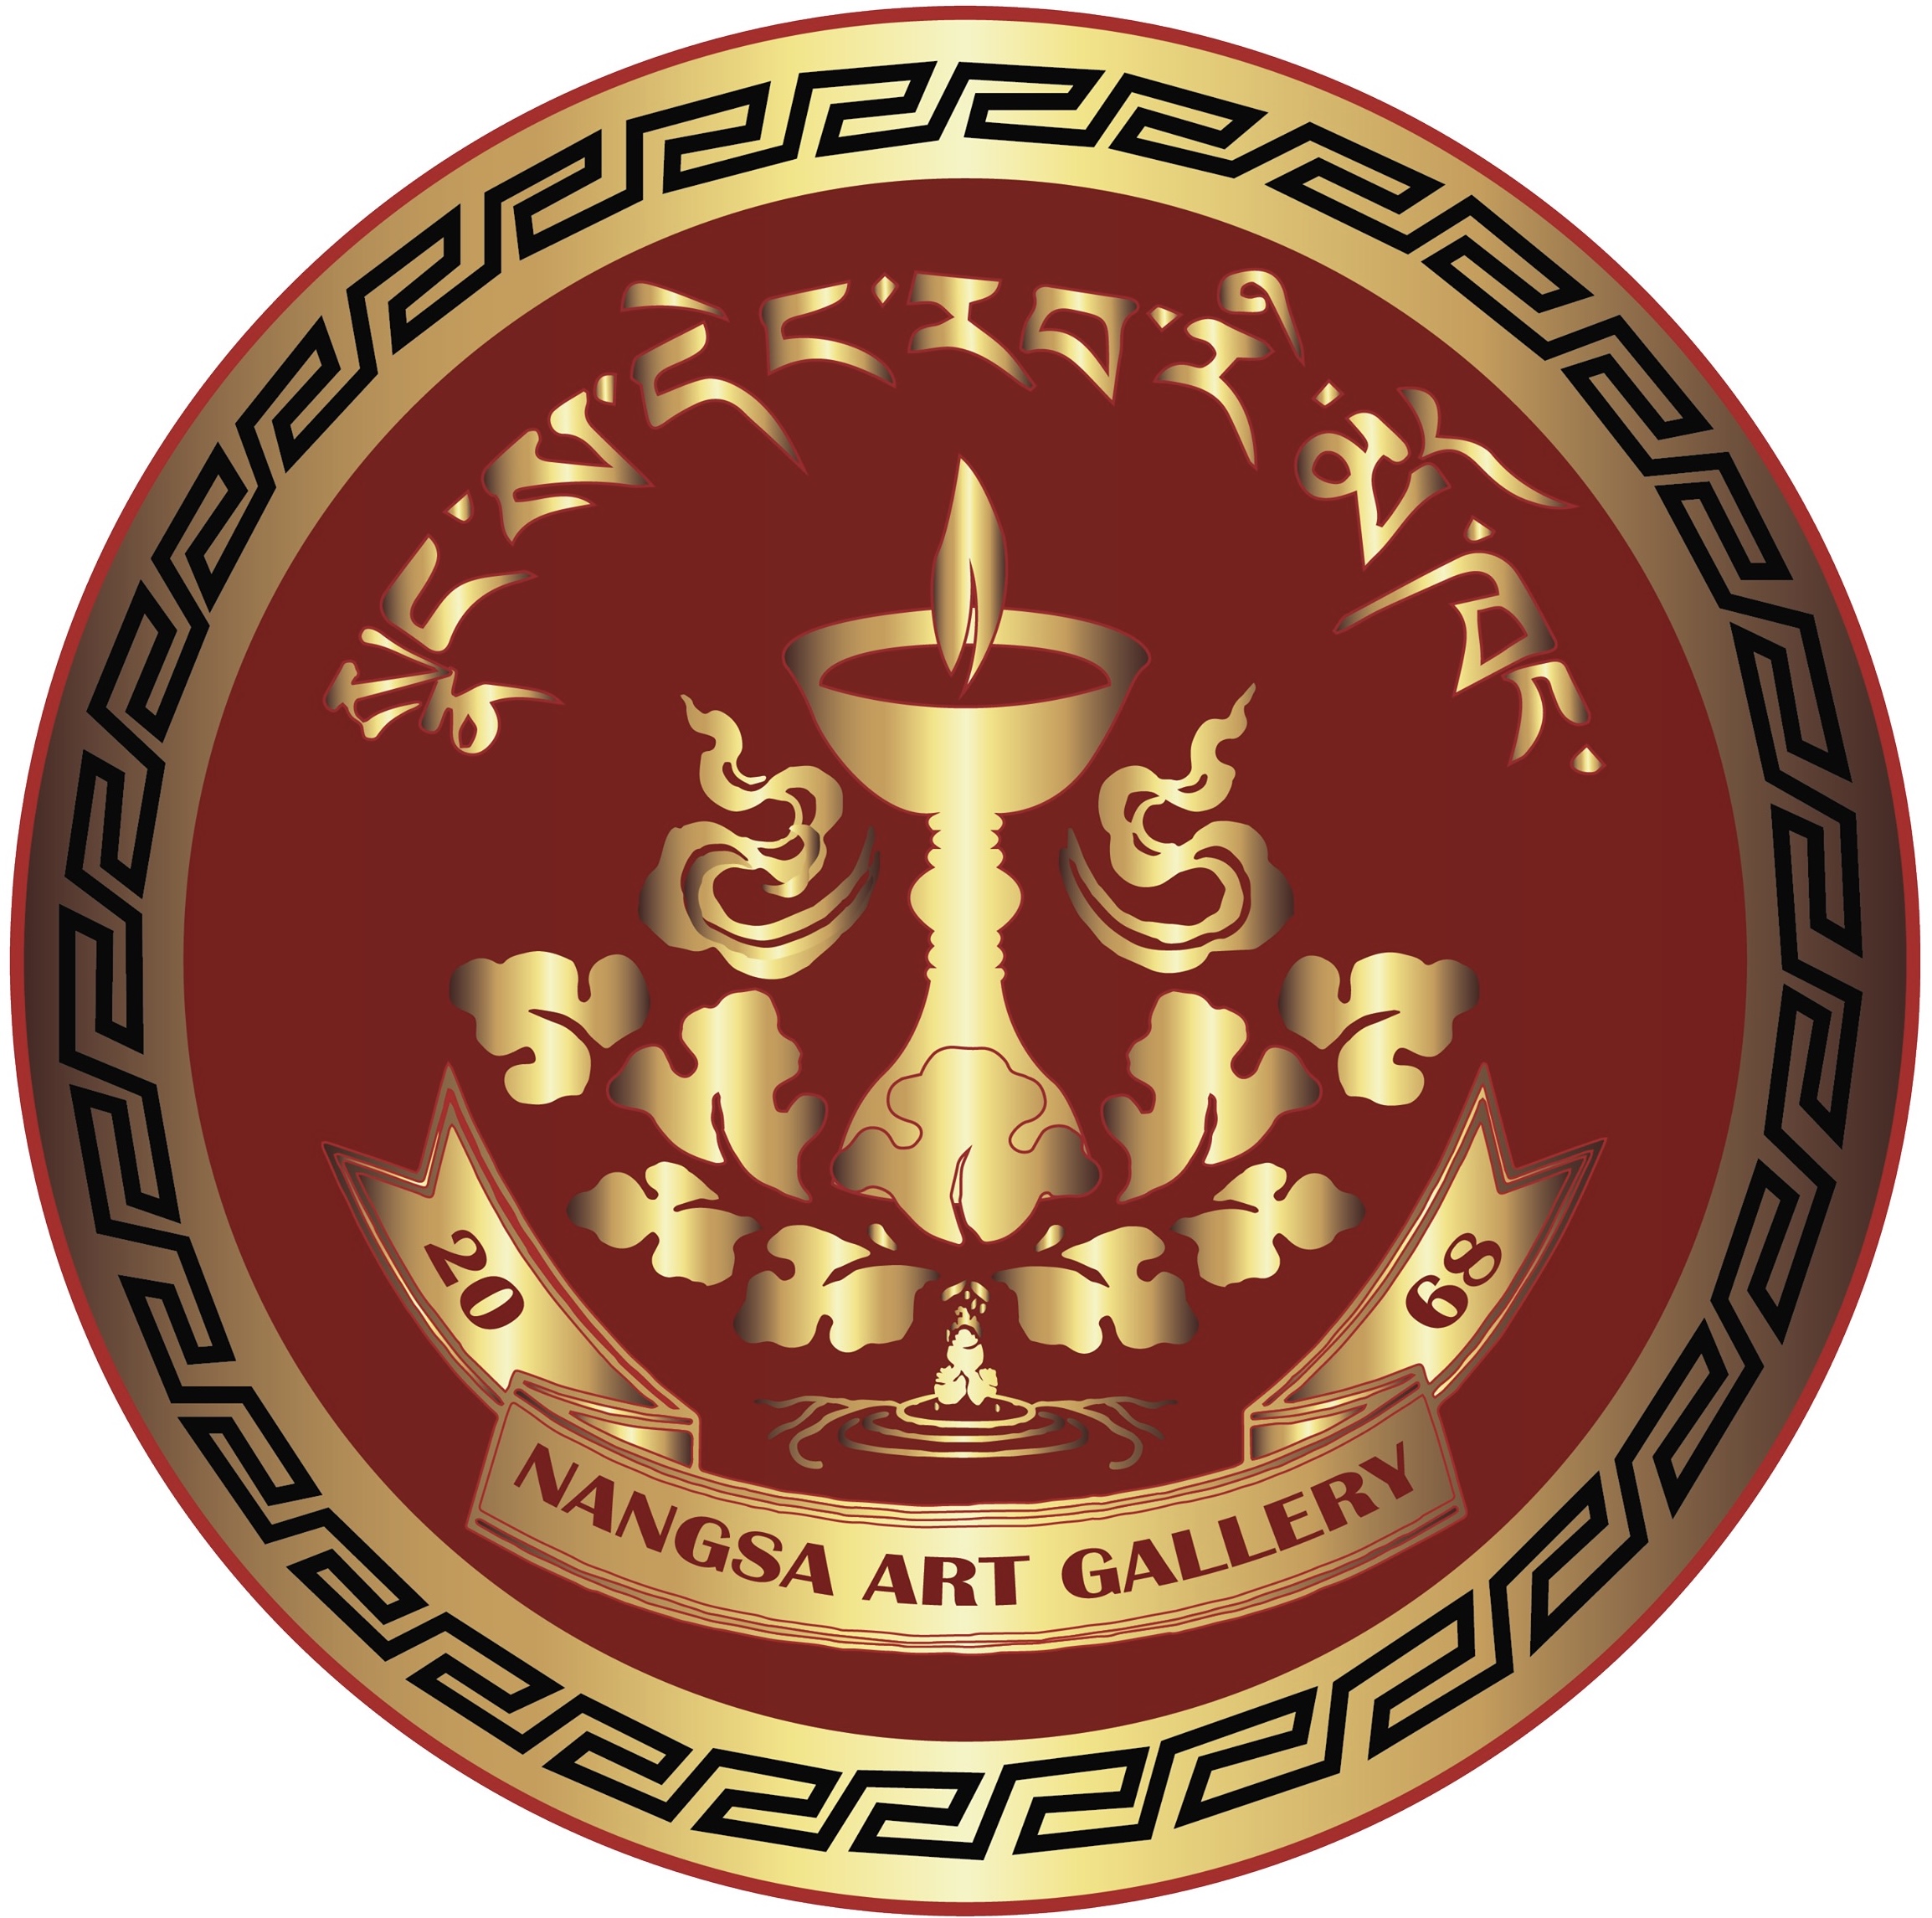 Nangsa Art Gallery